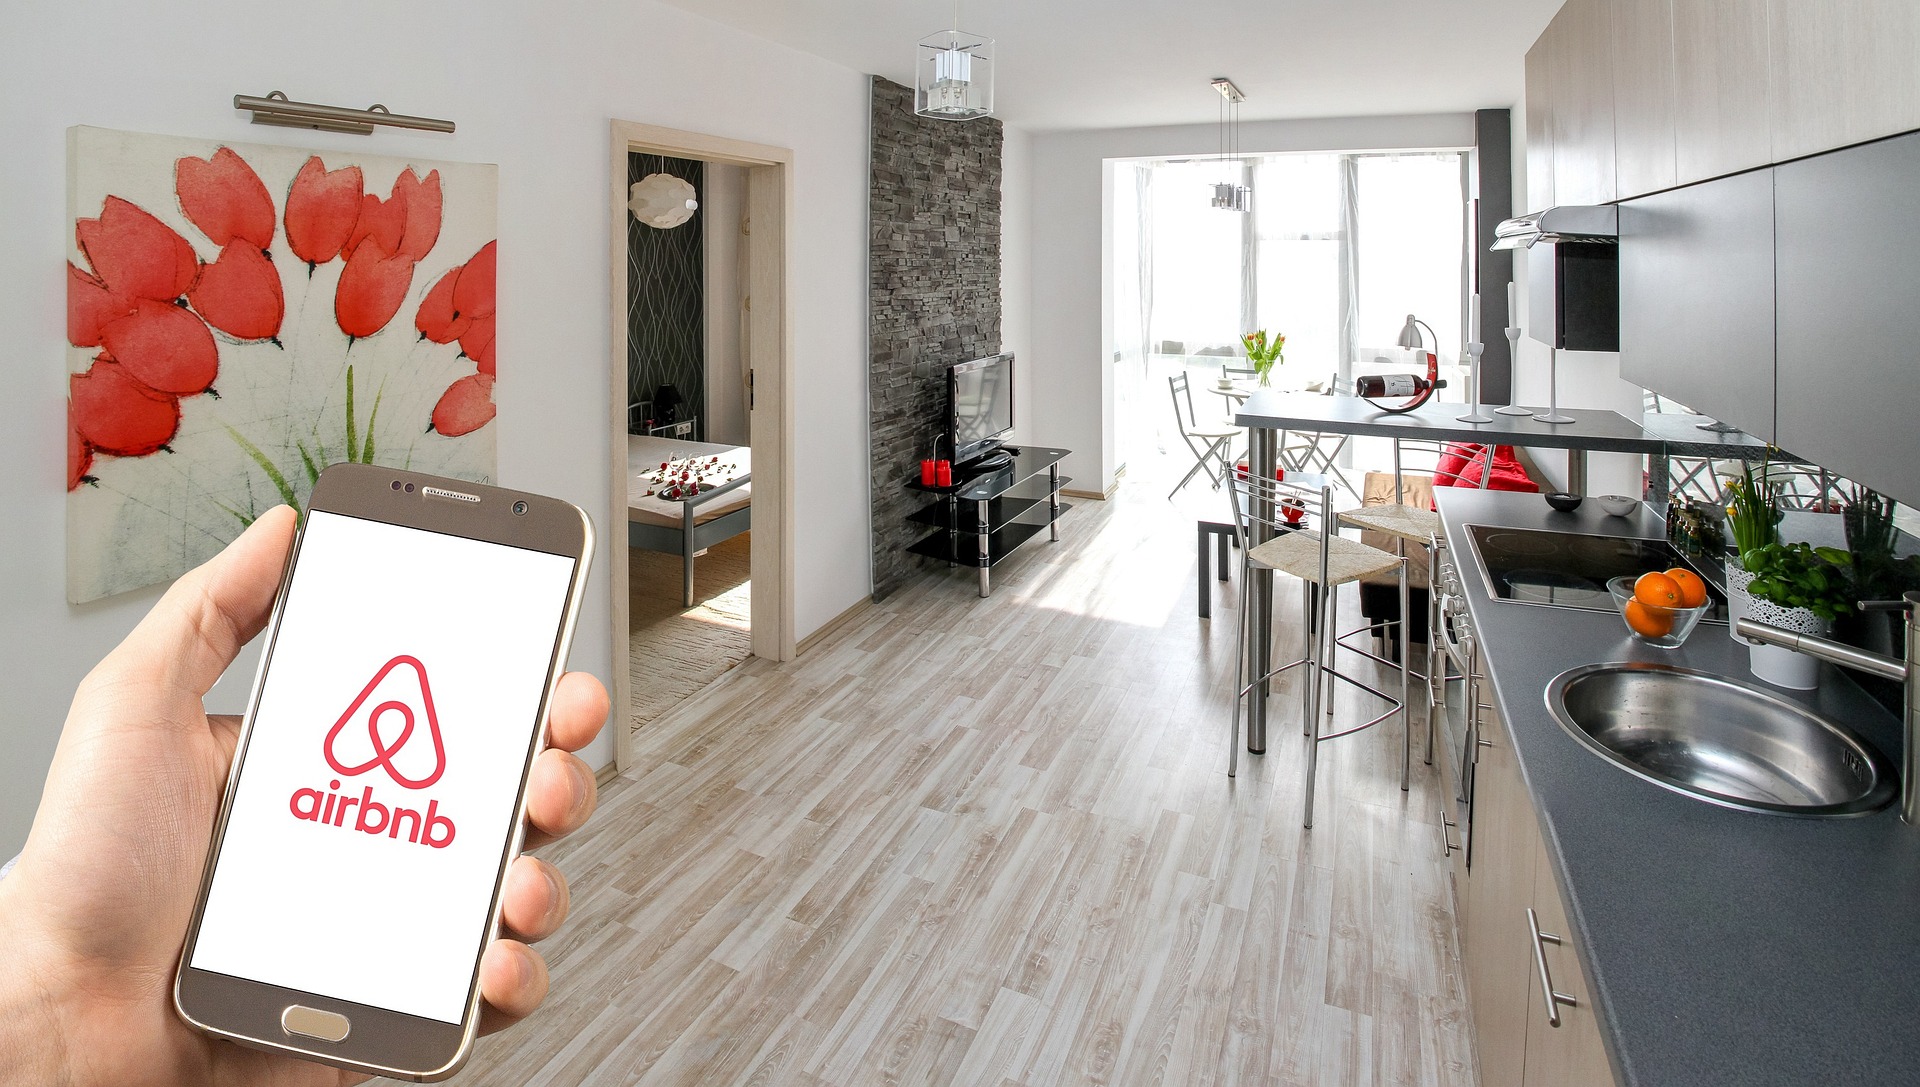 airbnb rental arbitrage business plan